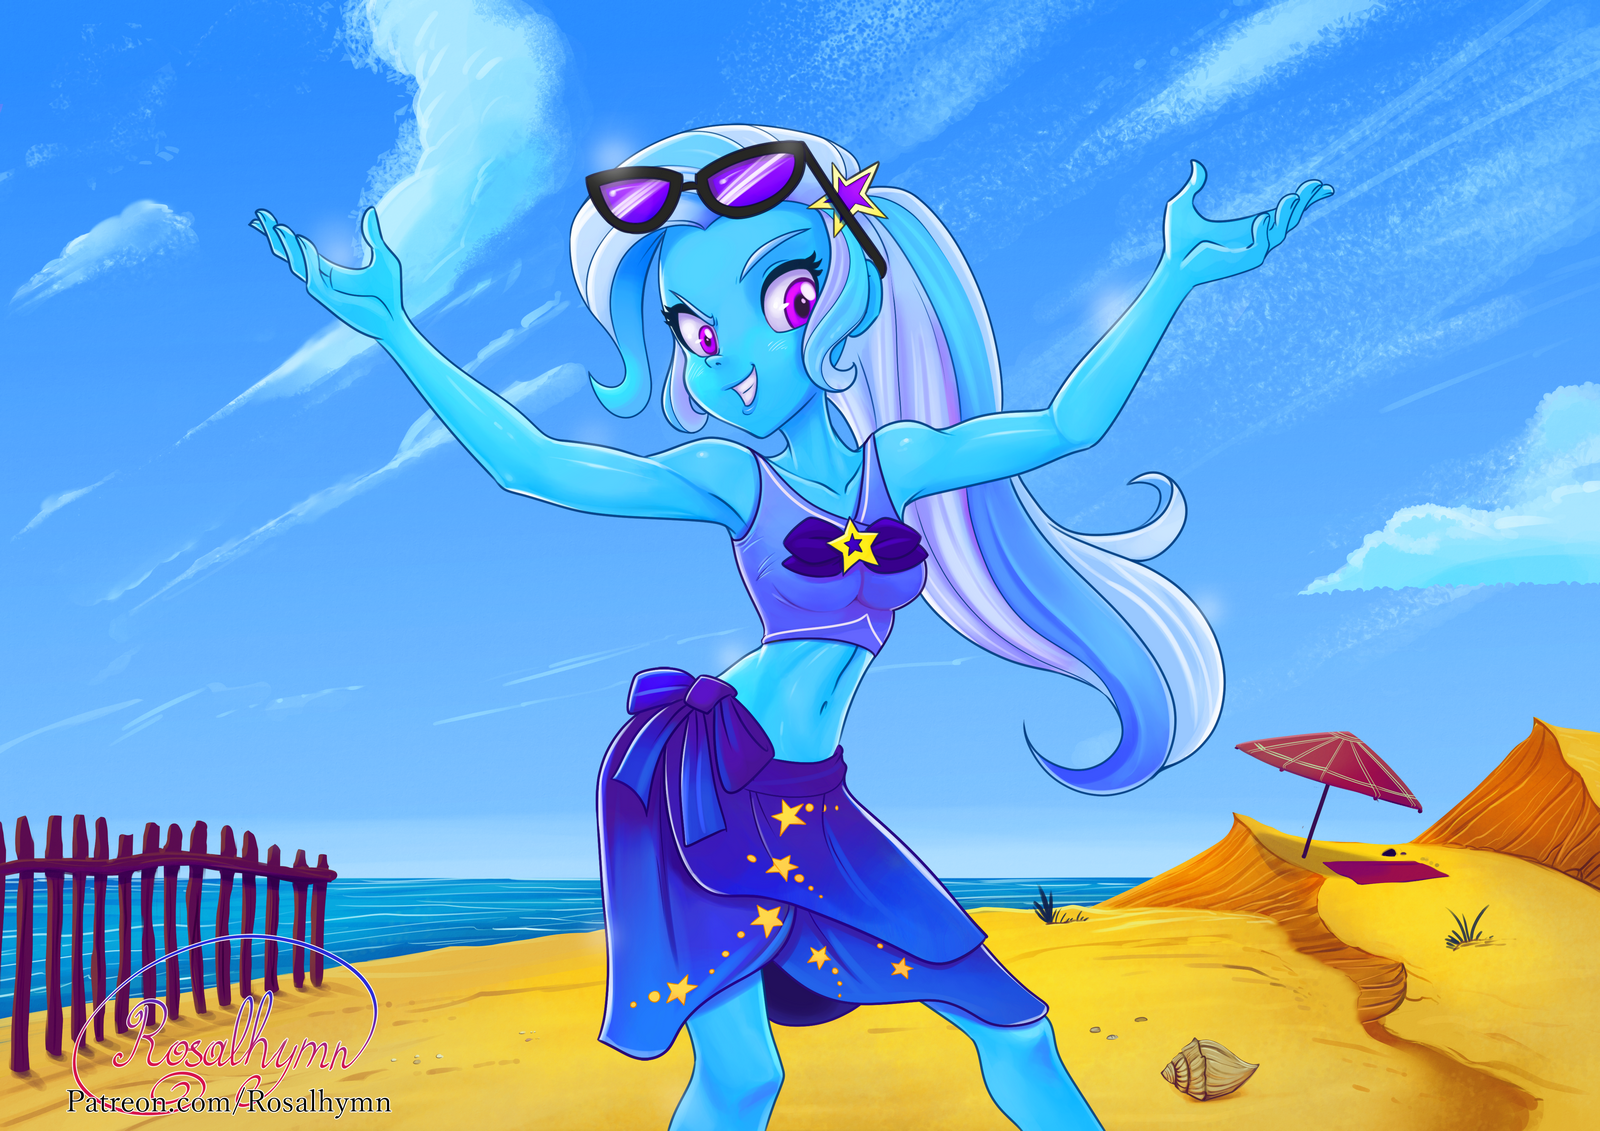 Trixie in her Great and Powerful Bikini!